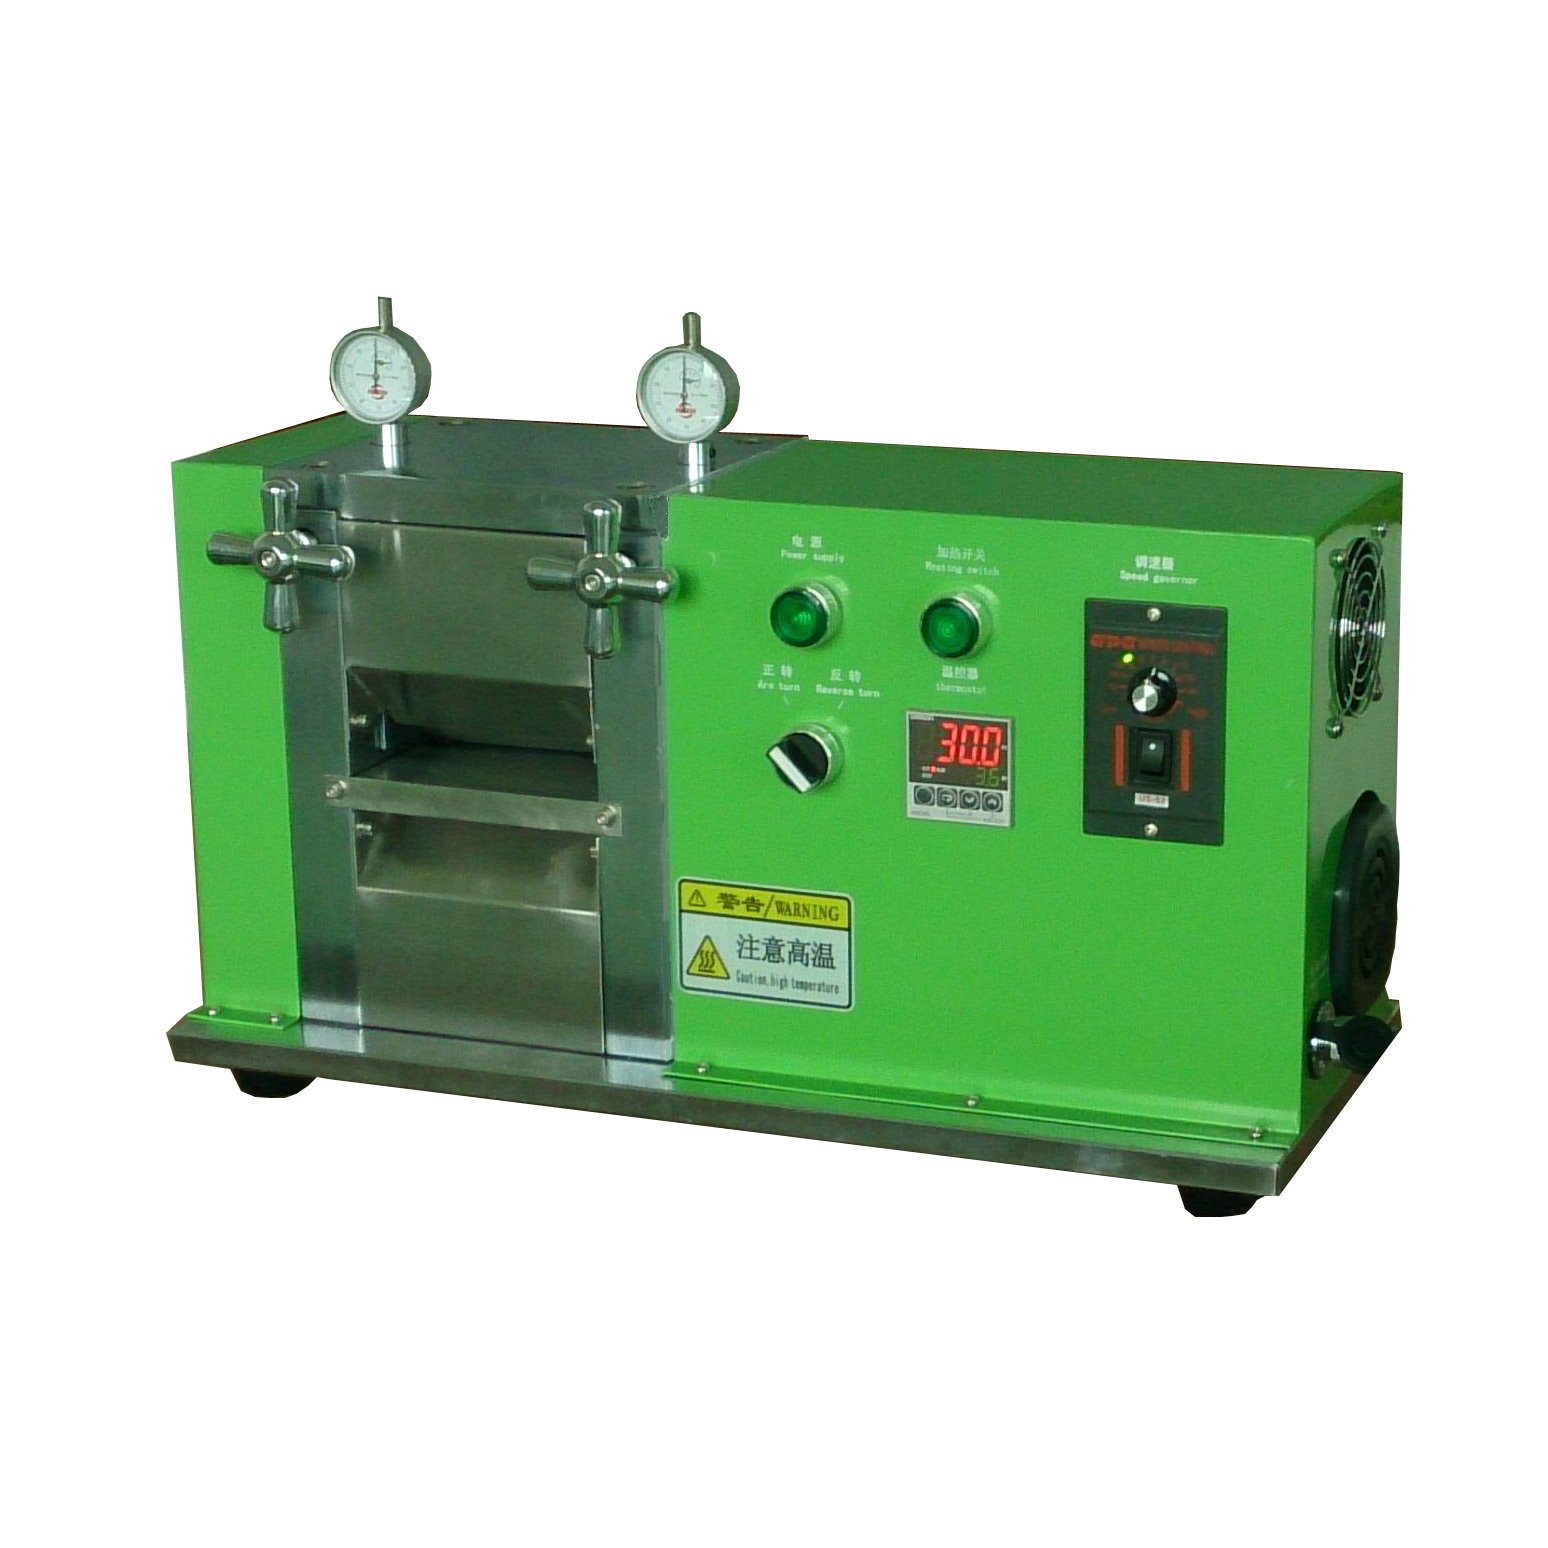 Hot lithium Battery Electrode Calendaring Machine /Electric Hot Rolling Press YD-01100,Glovebox